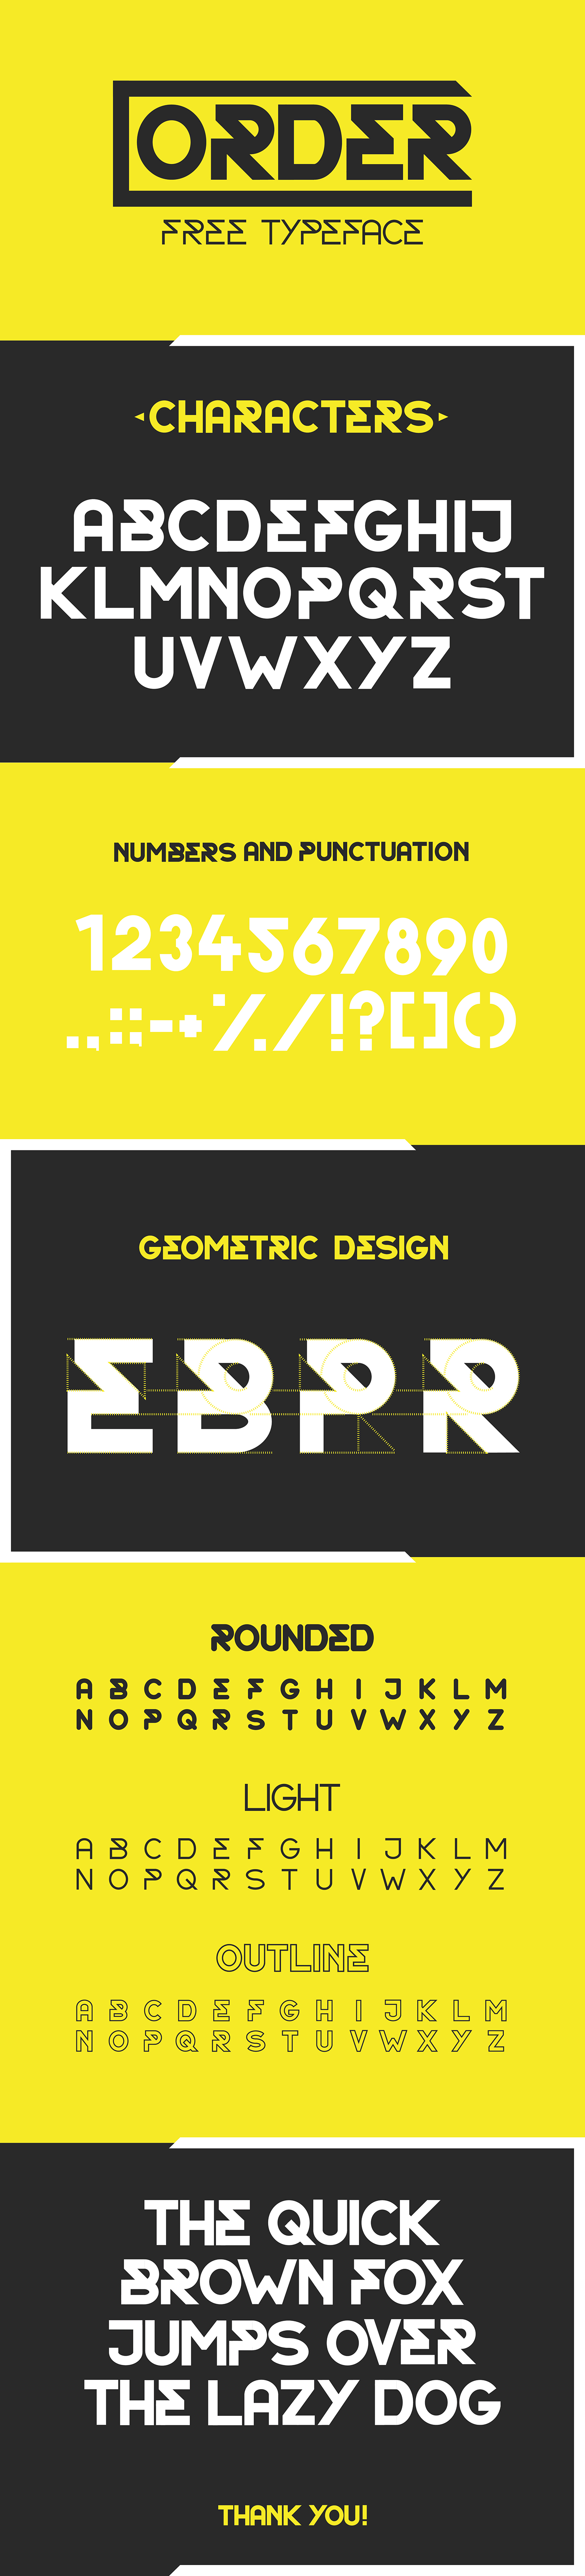 Typeface font free download Order sans serif type lettering graphic design vector